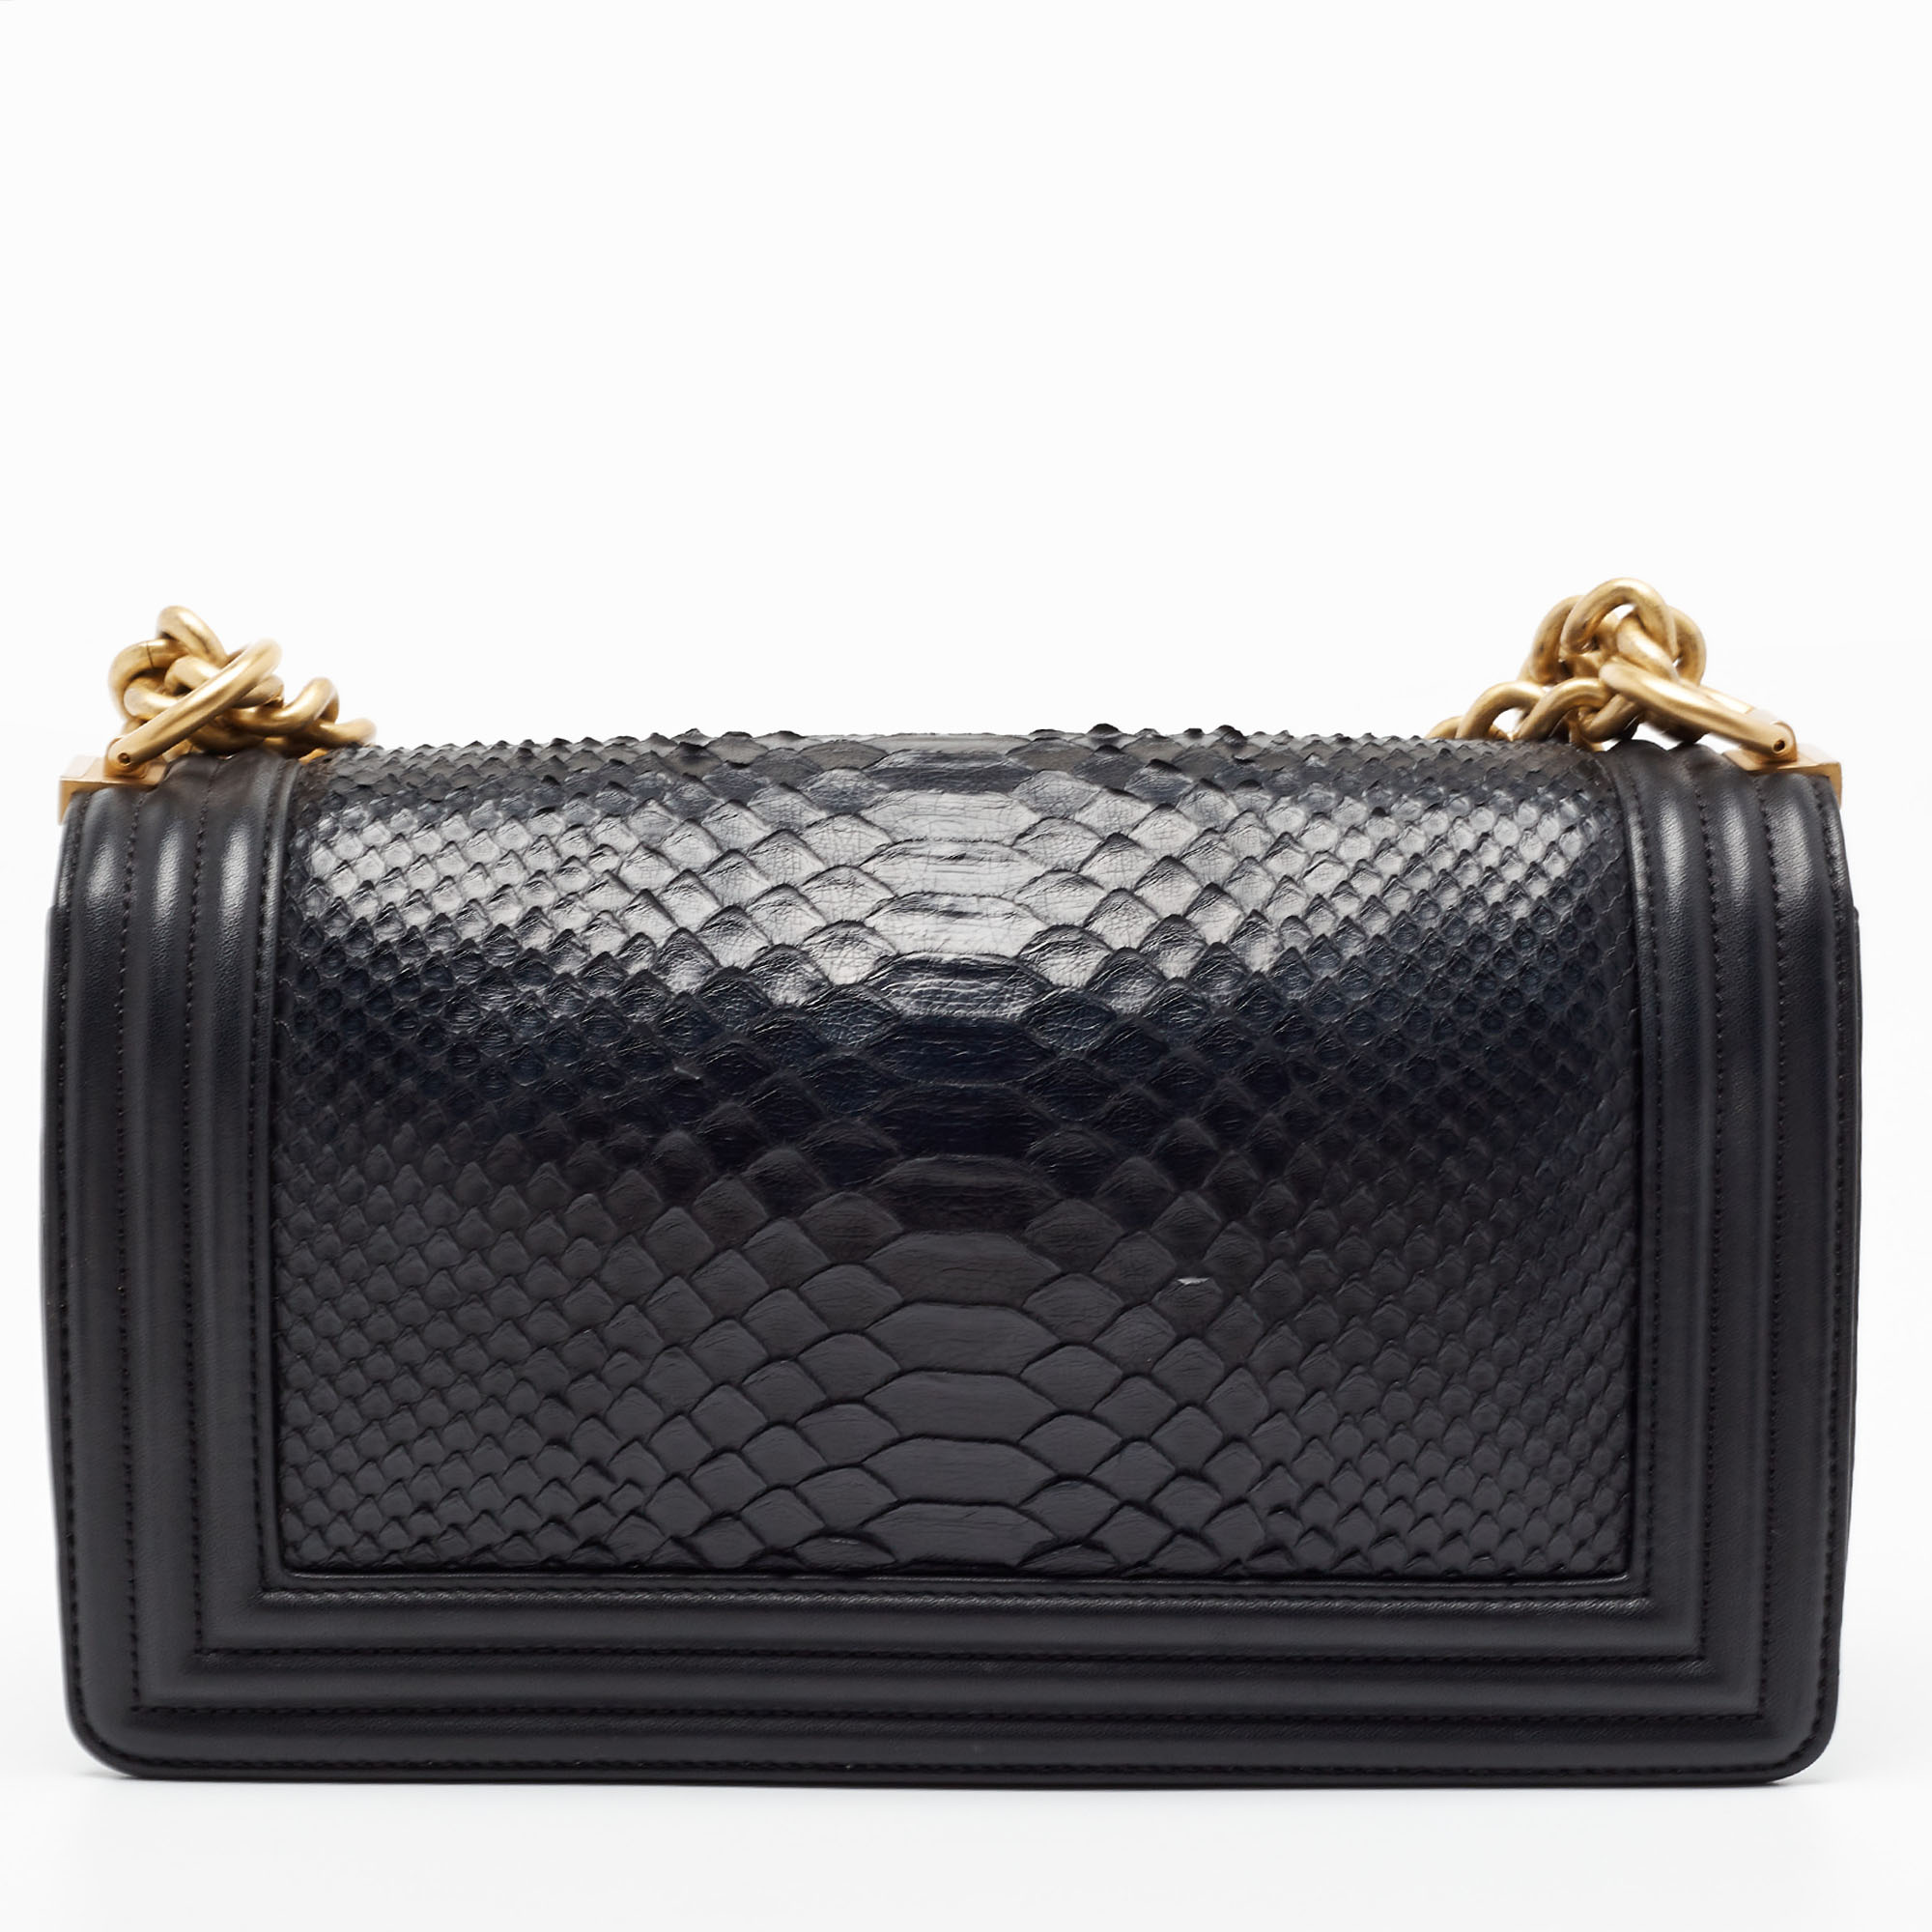 Chanel Black Python And Leather Medium Boy Flap Bag